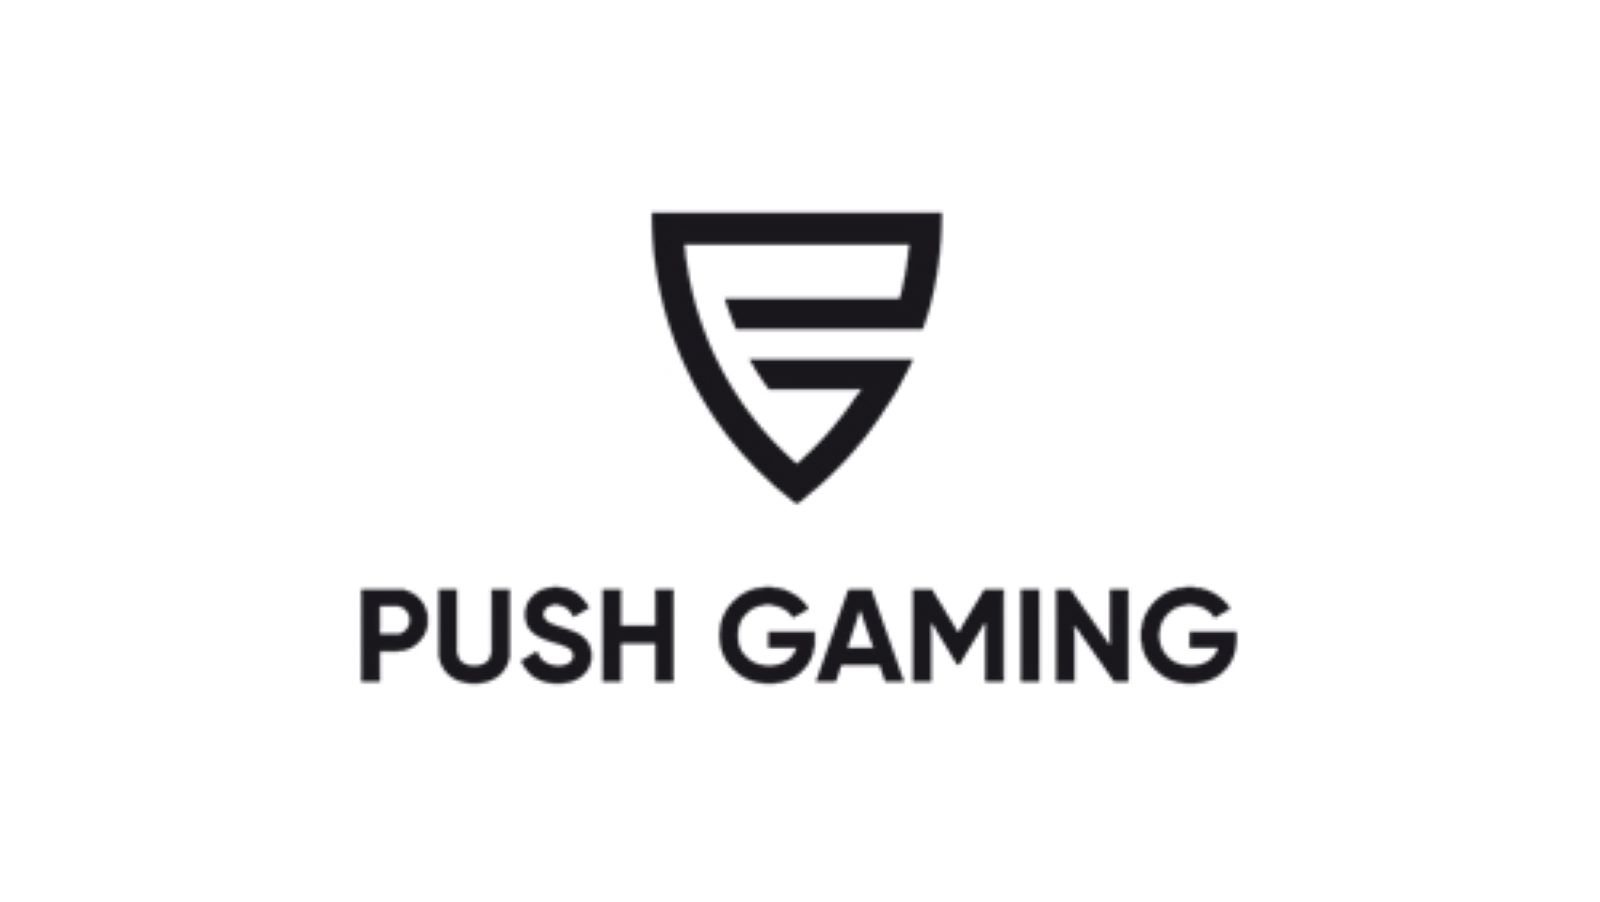 MrQ slots Push Gaming Games into casino offering